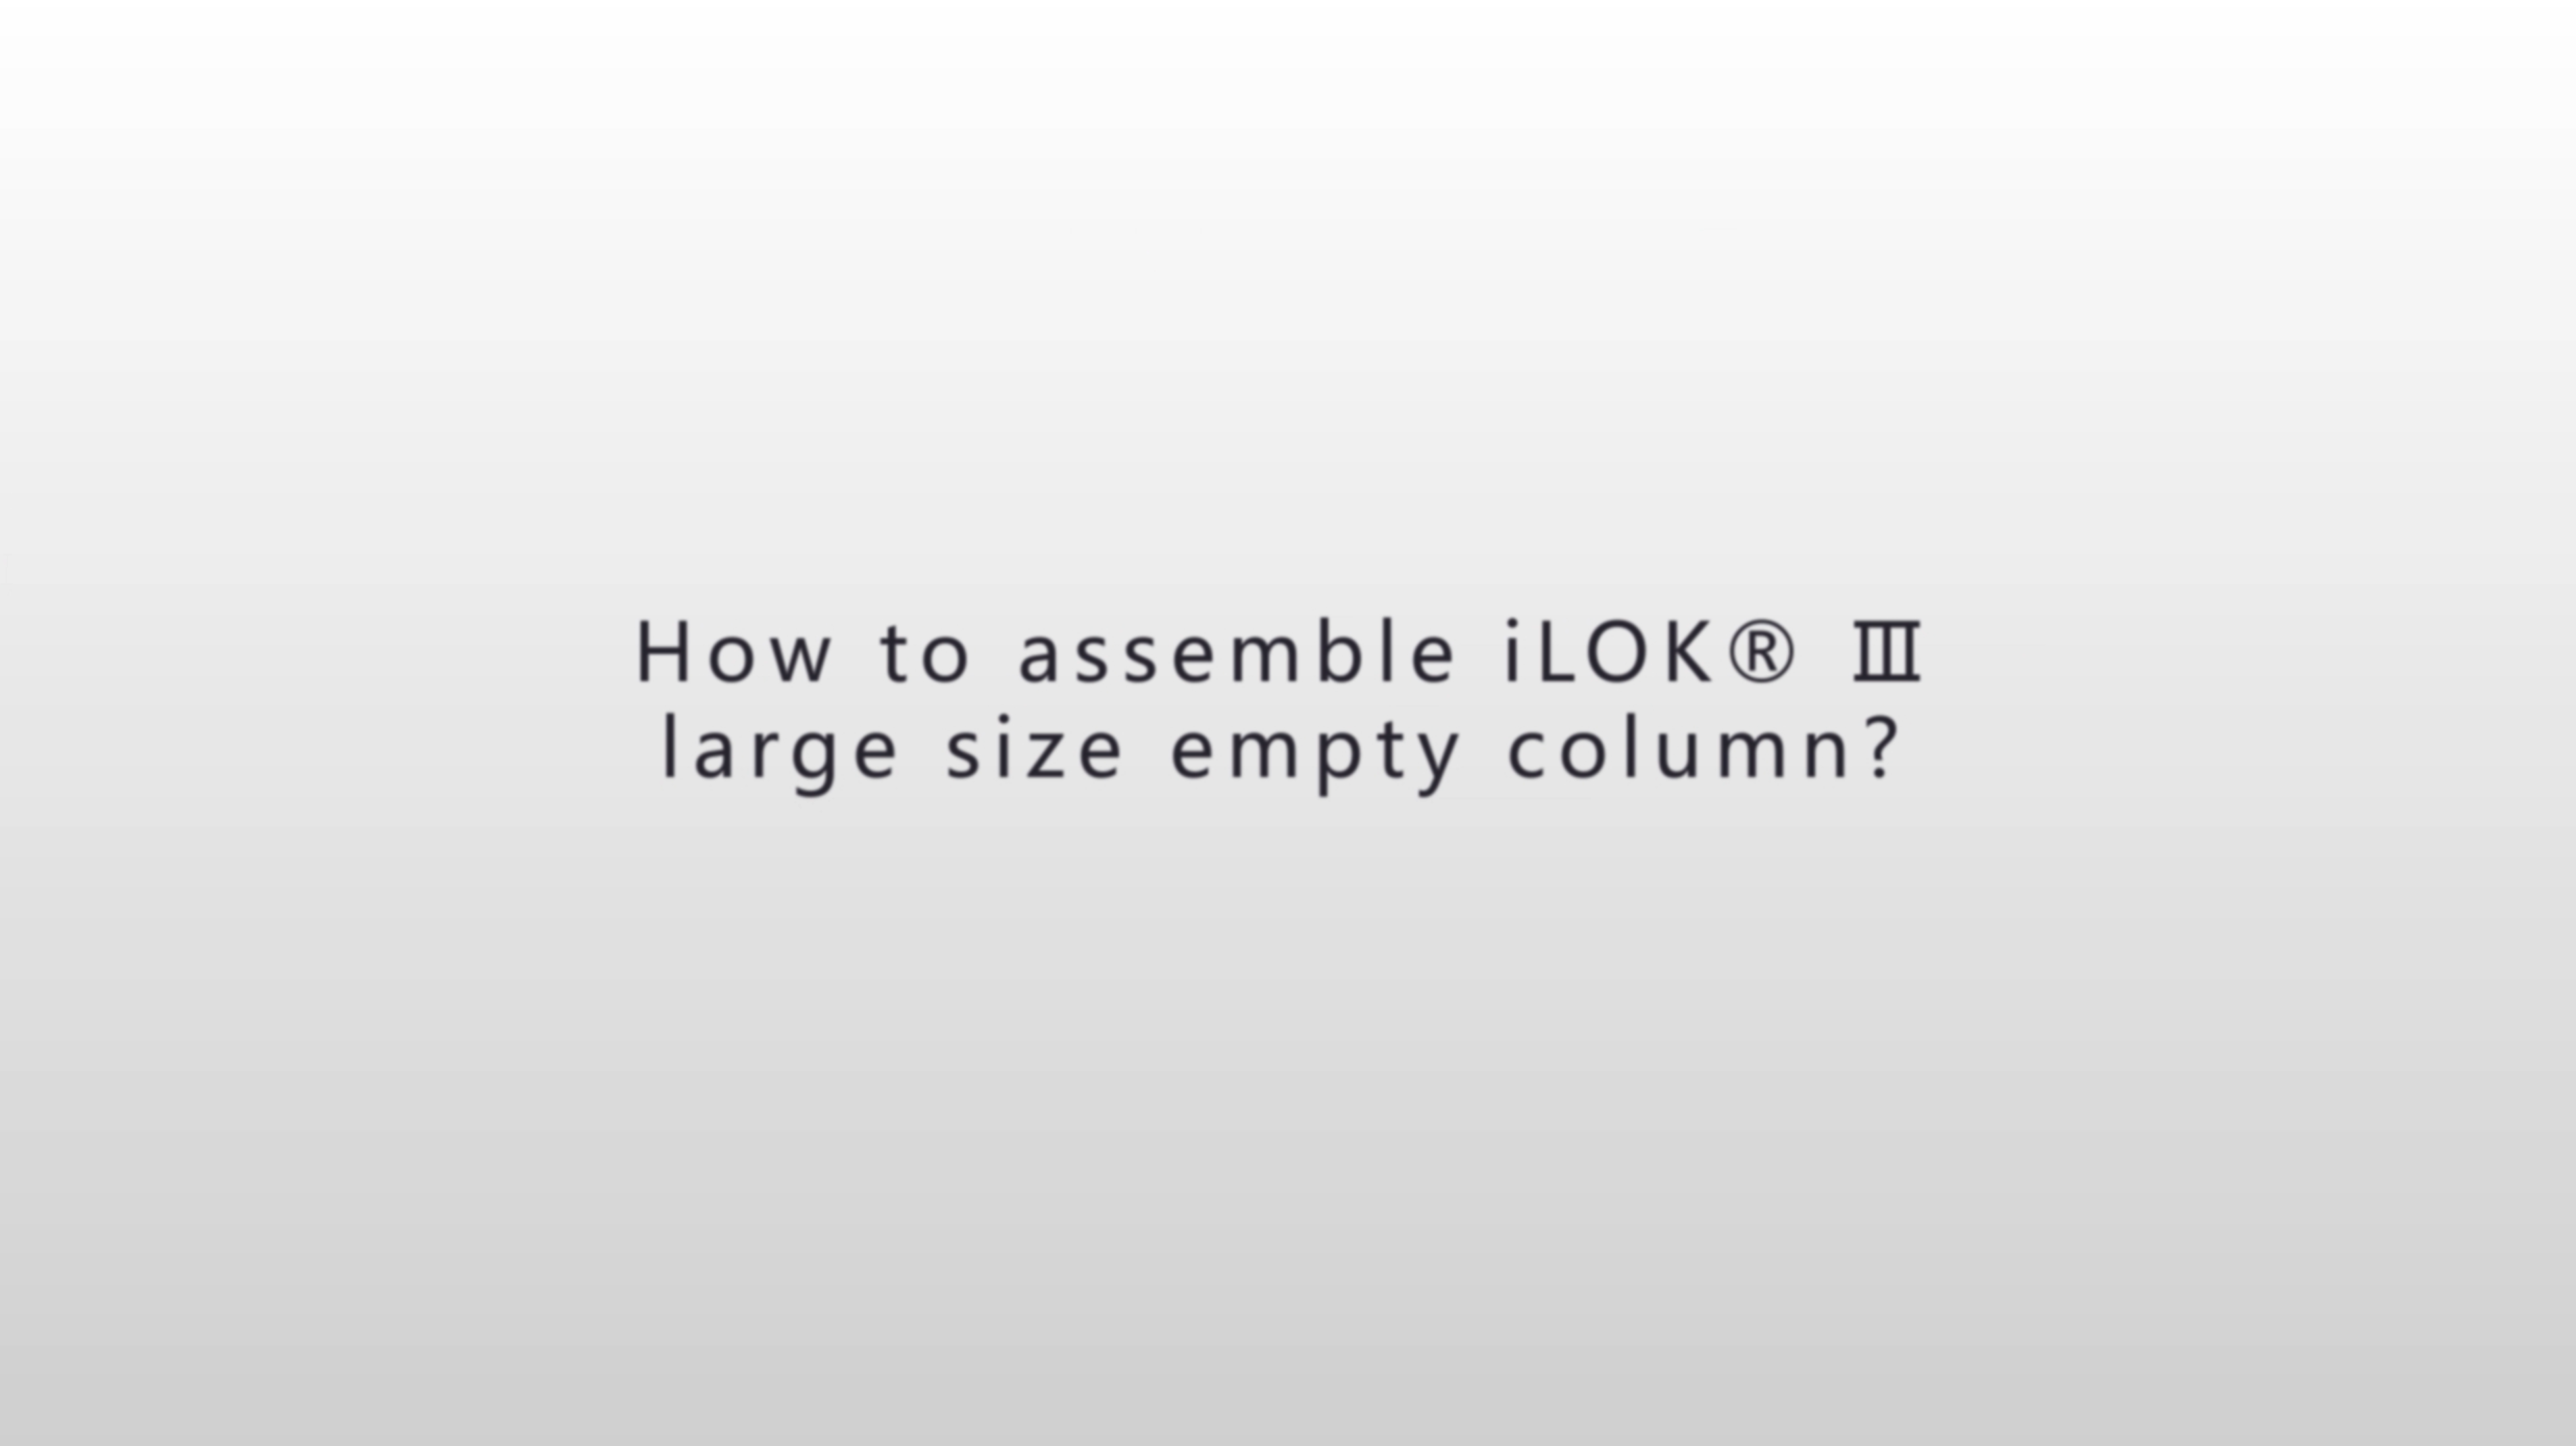 iLok III 대형 빈 컬럼을 조립하는 방법은 무엇입니까?